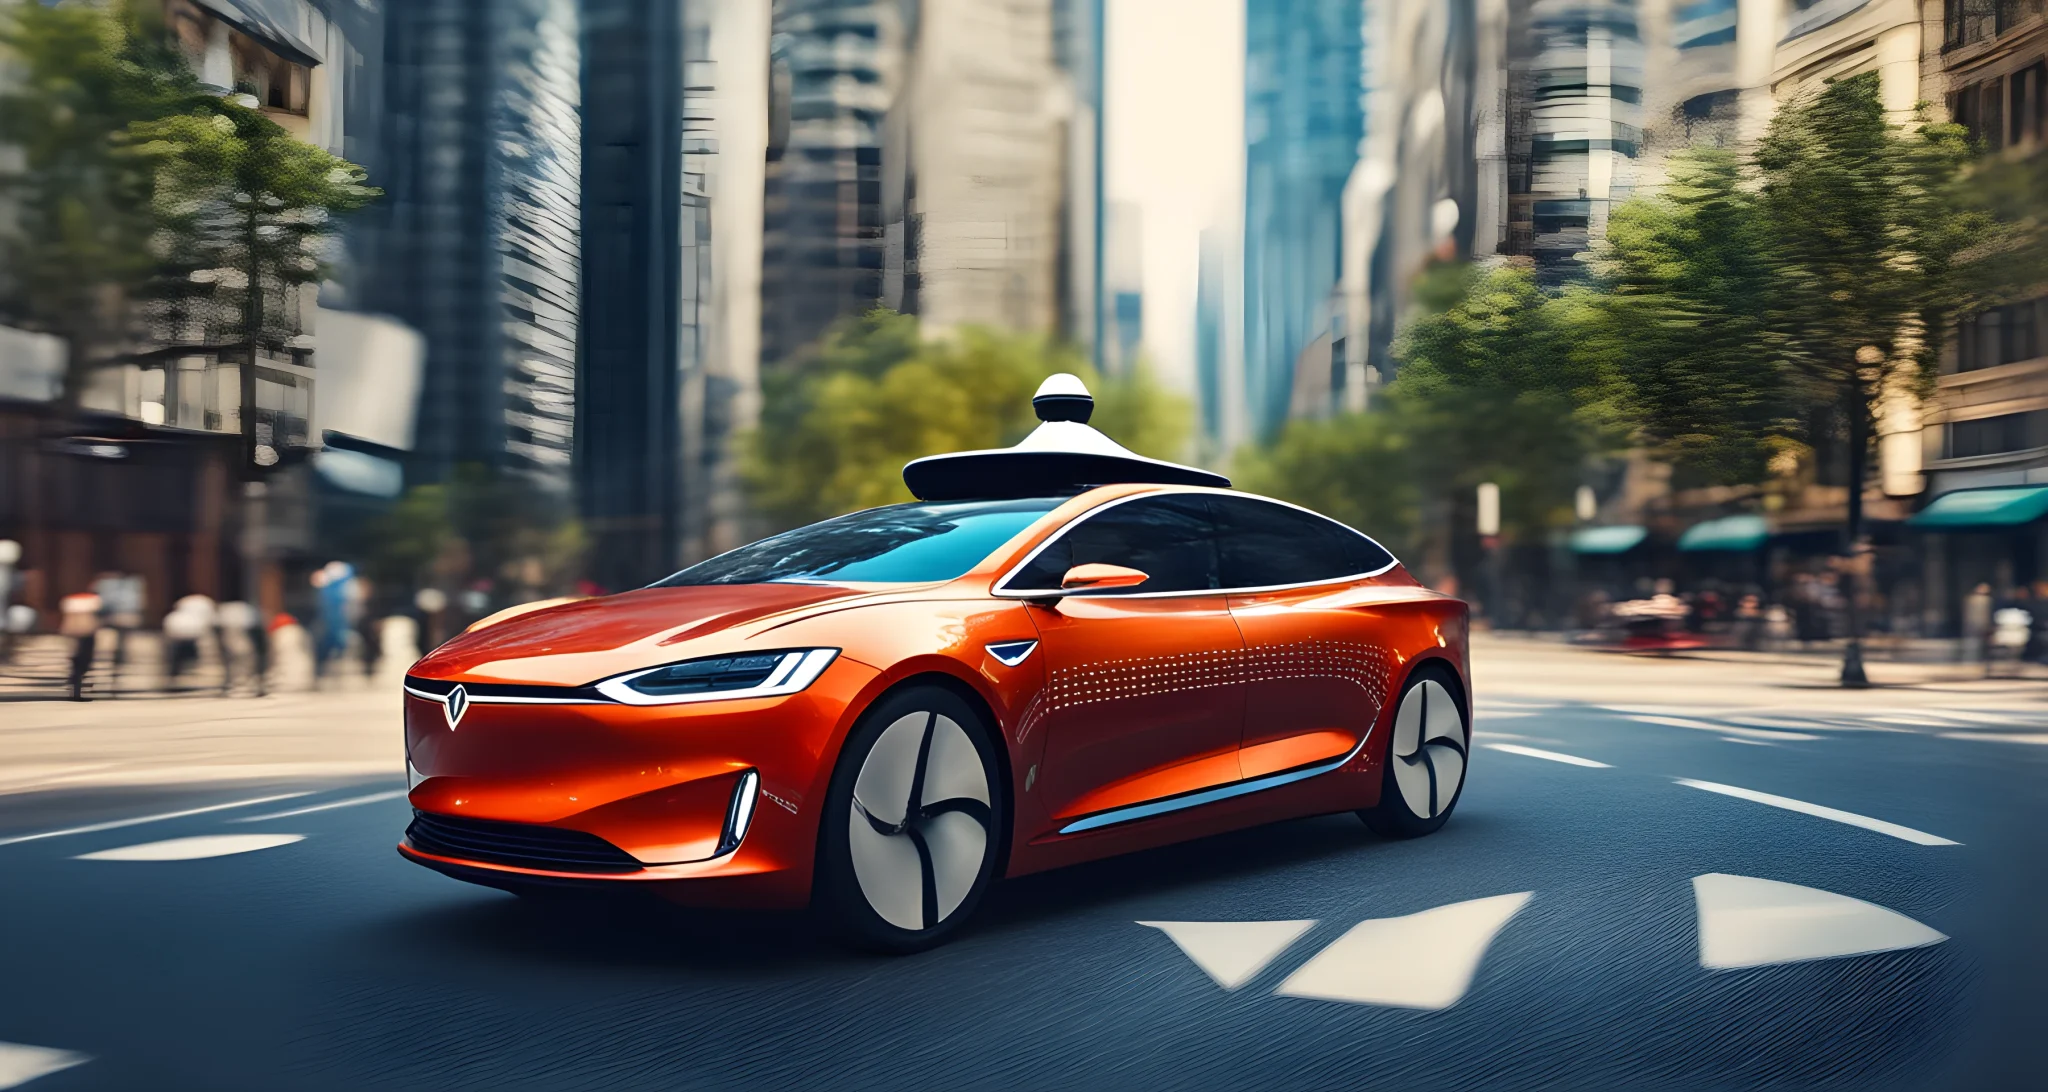 The image shows a sleek, self-driving car navigating through a city street.